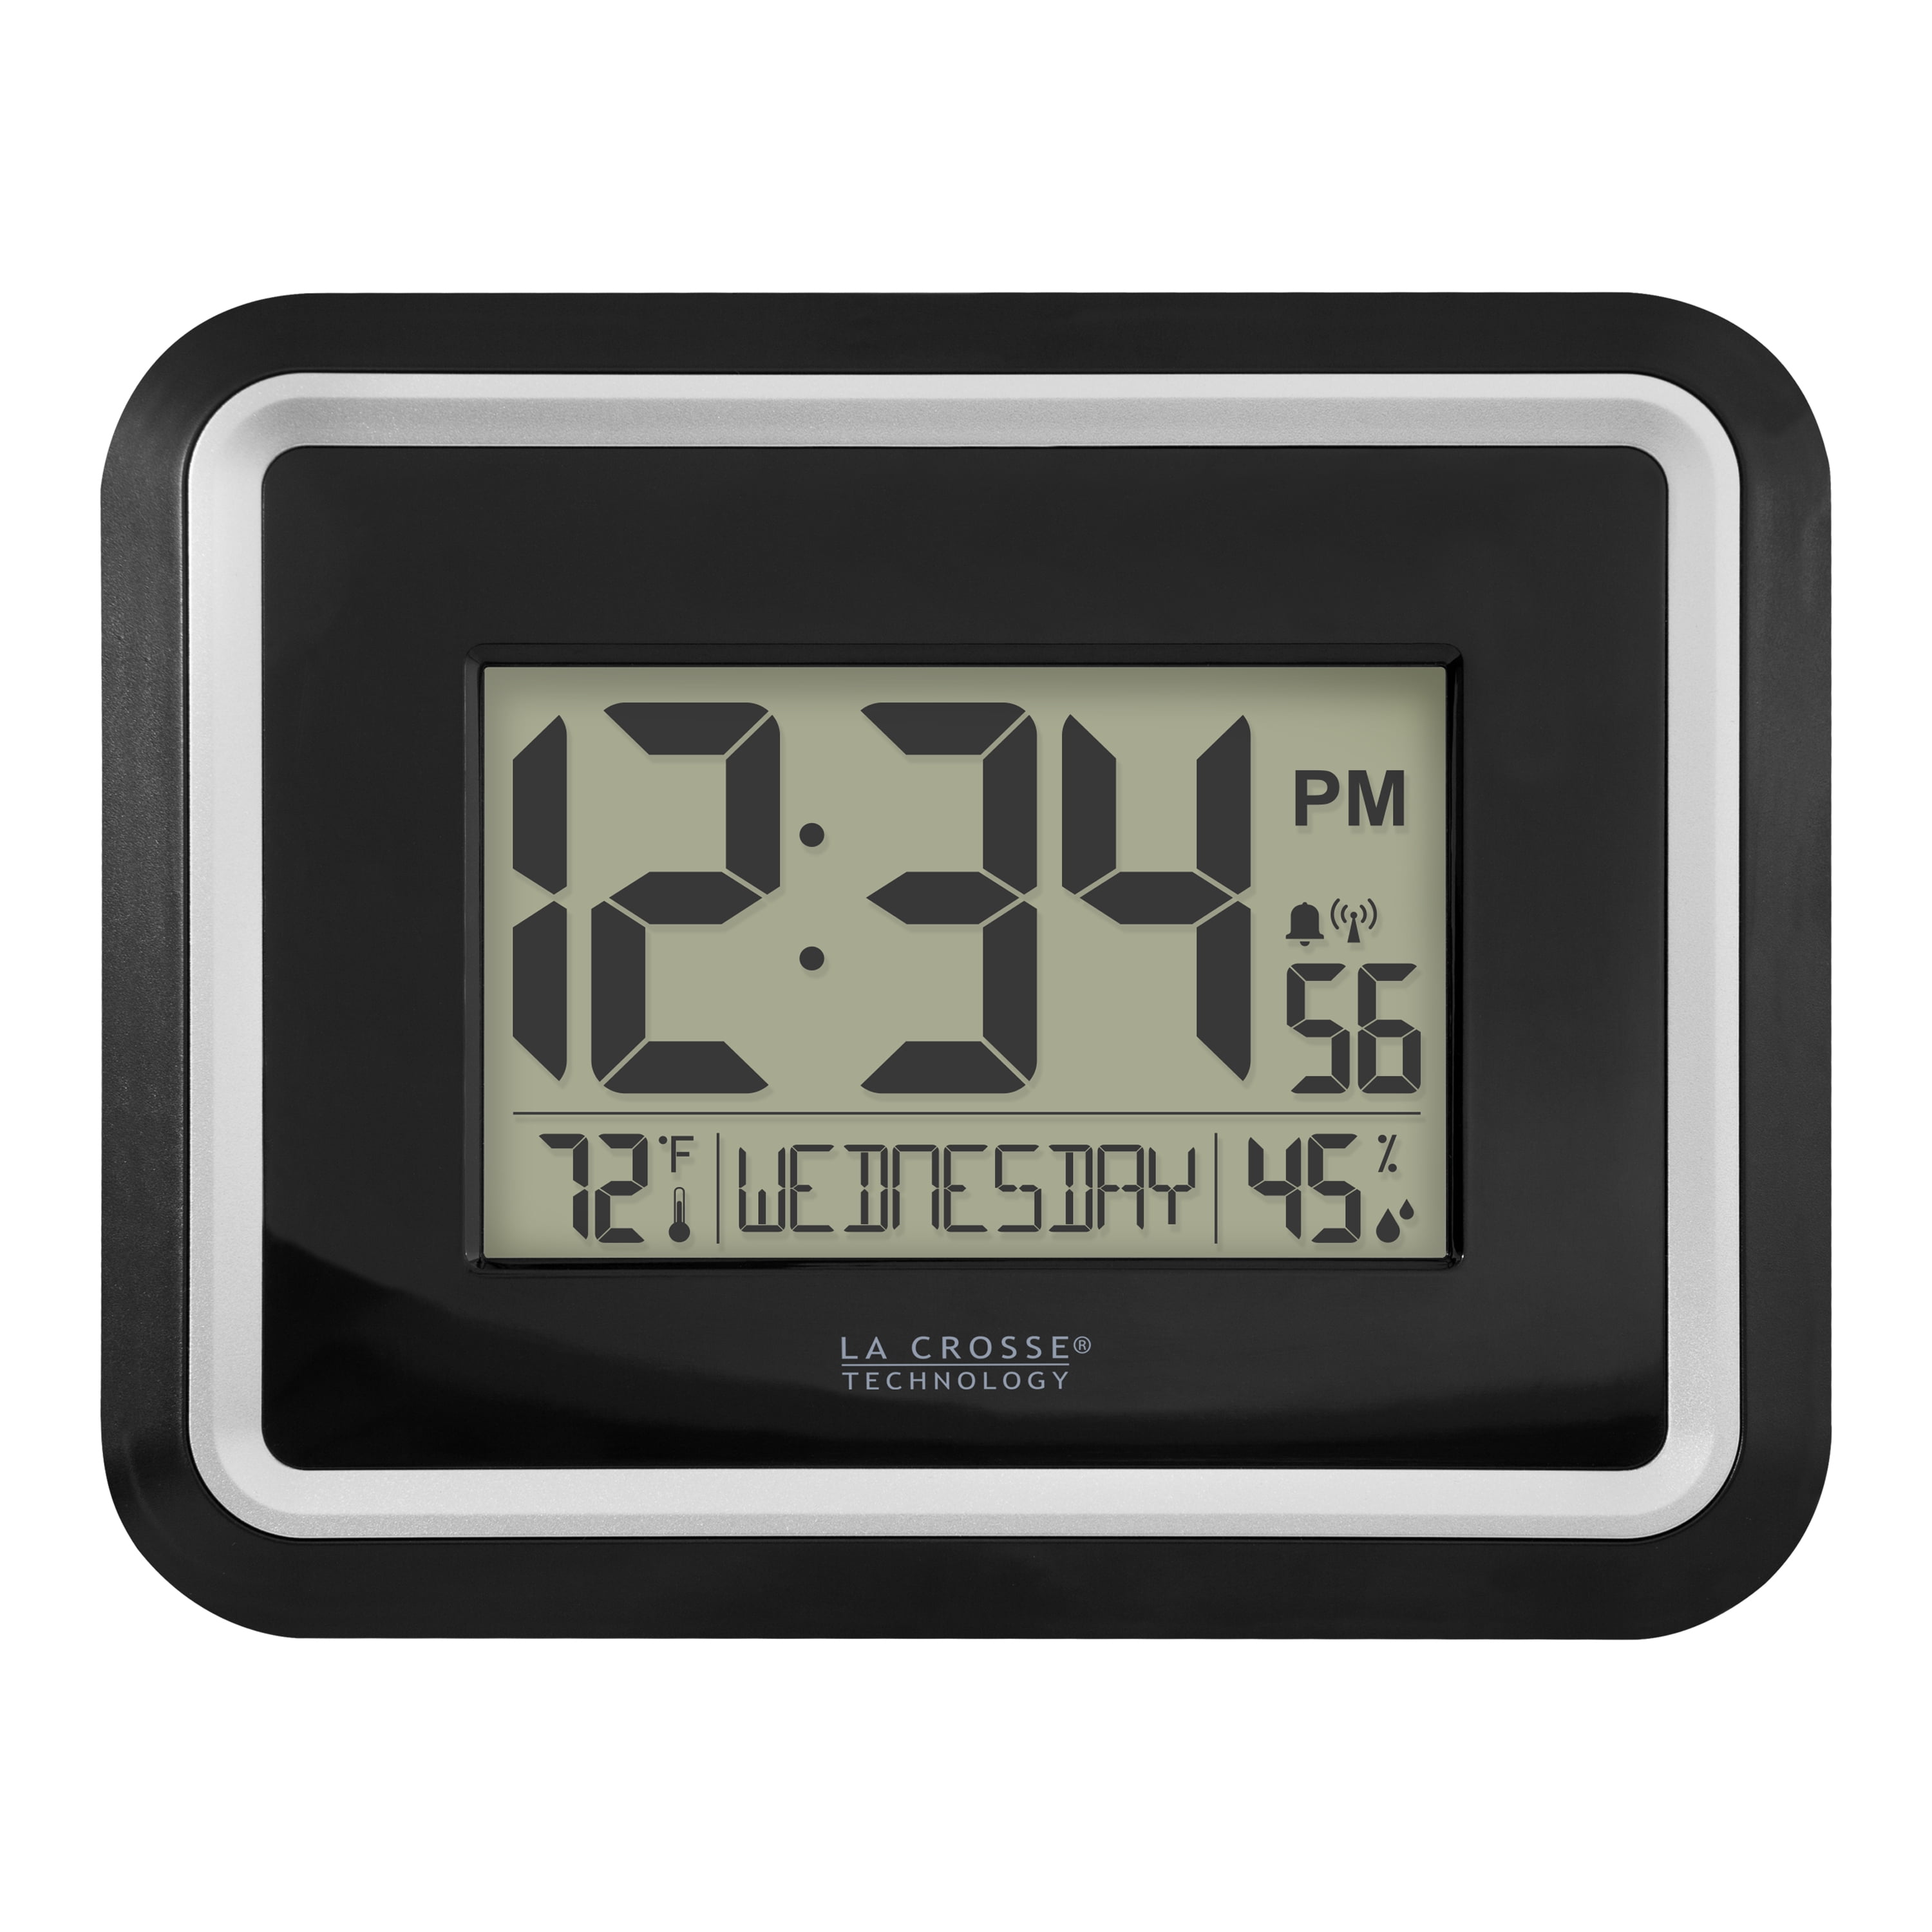 Details about   La Crosse Technology Black WT-8005U-B Atomic Digital Wall Clock with Indoor T... 